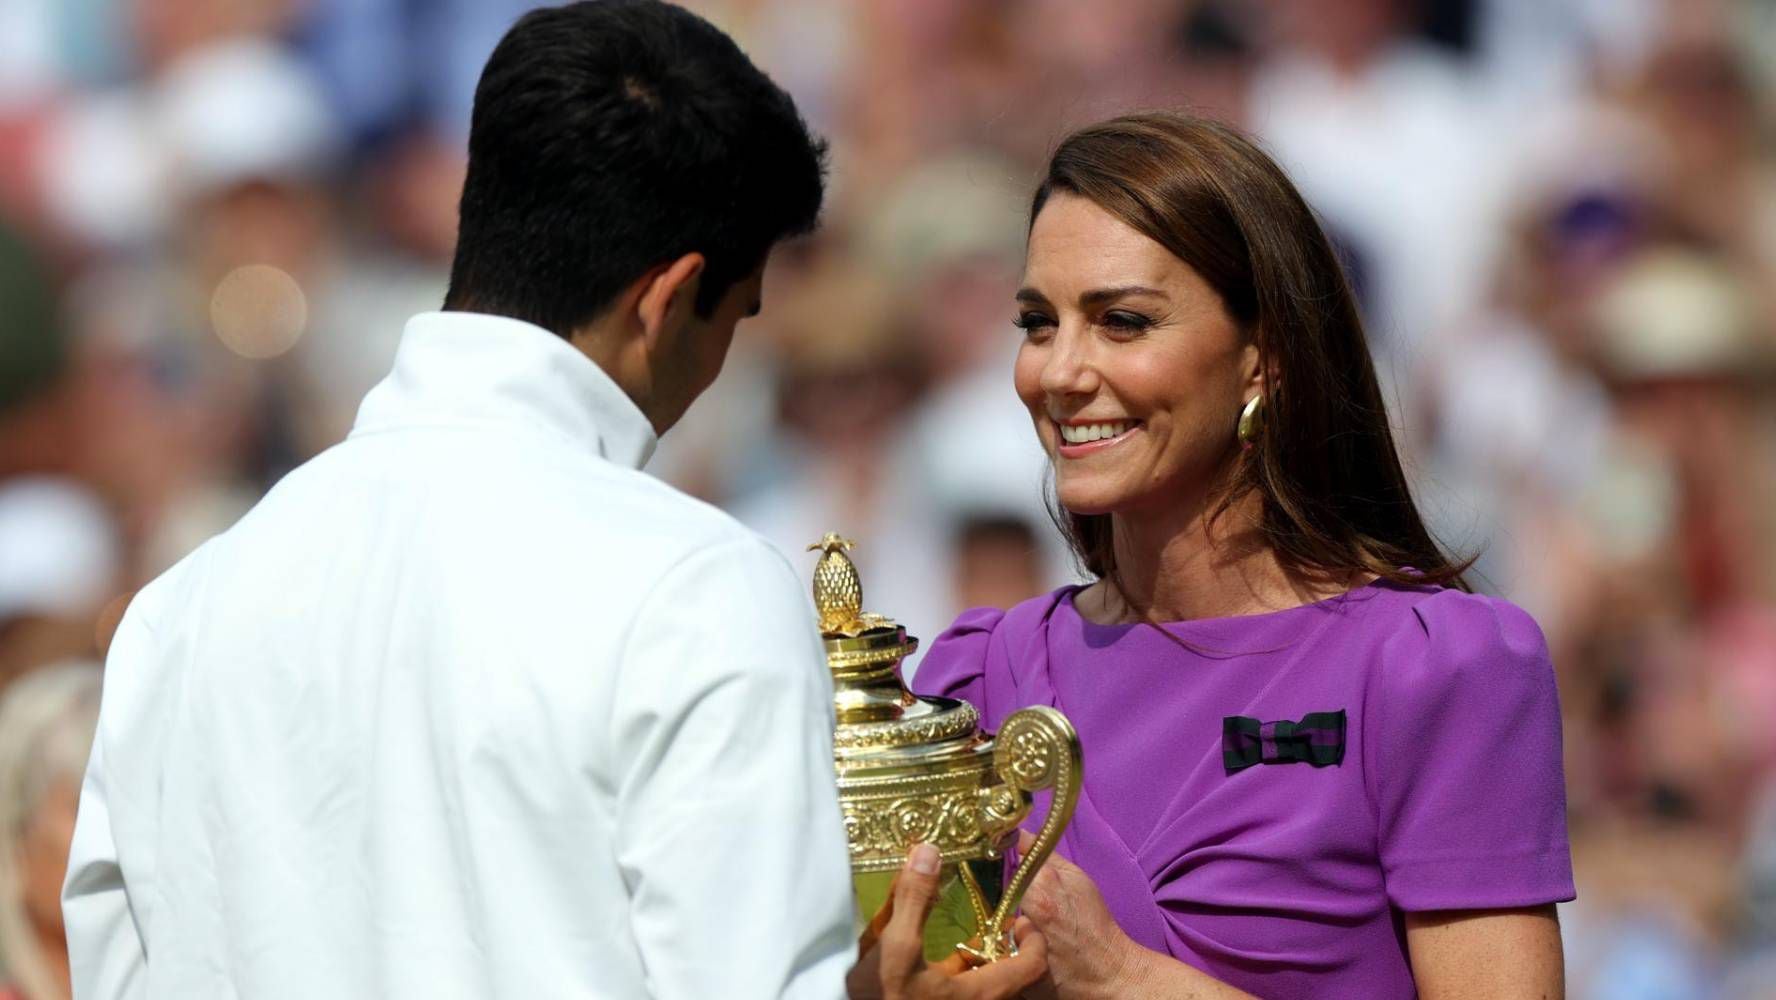 Kate Middleton reaparece en público para asistir al triunfo de Carlos Alcaraz en Wimbledon